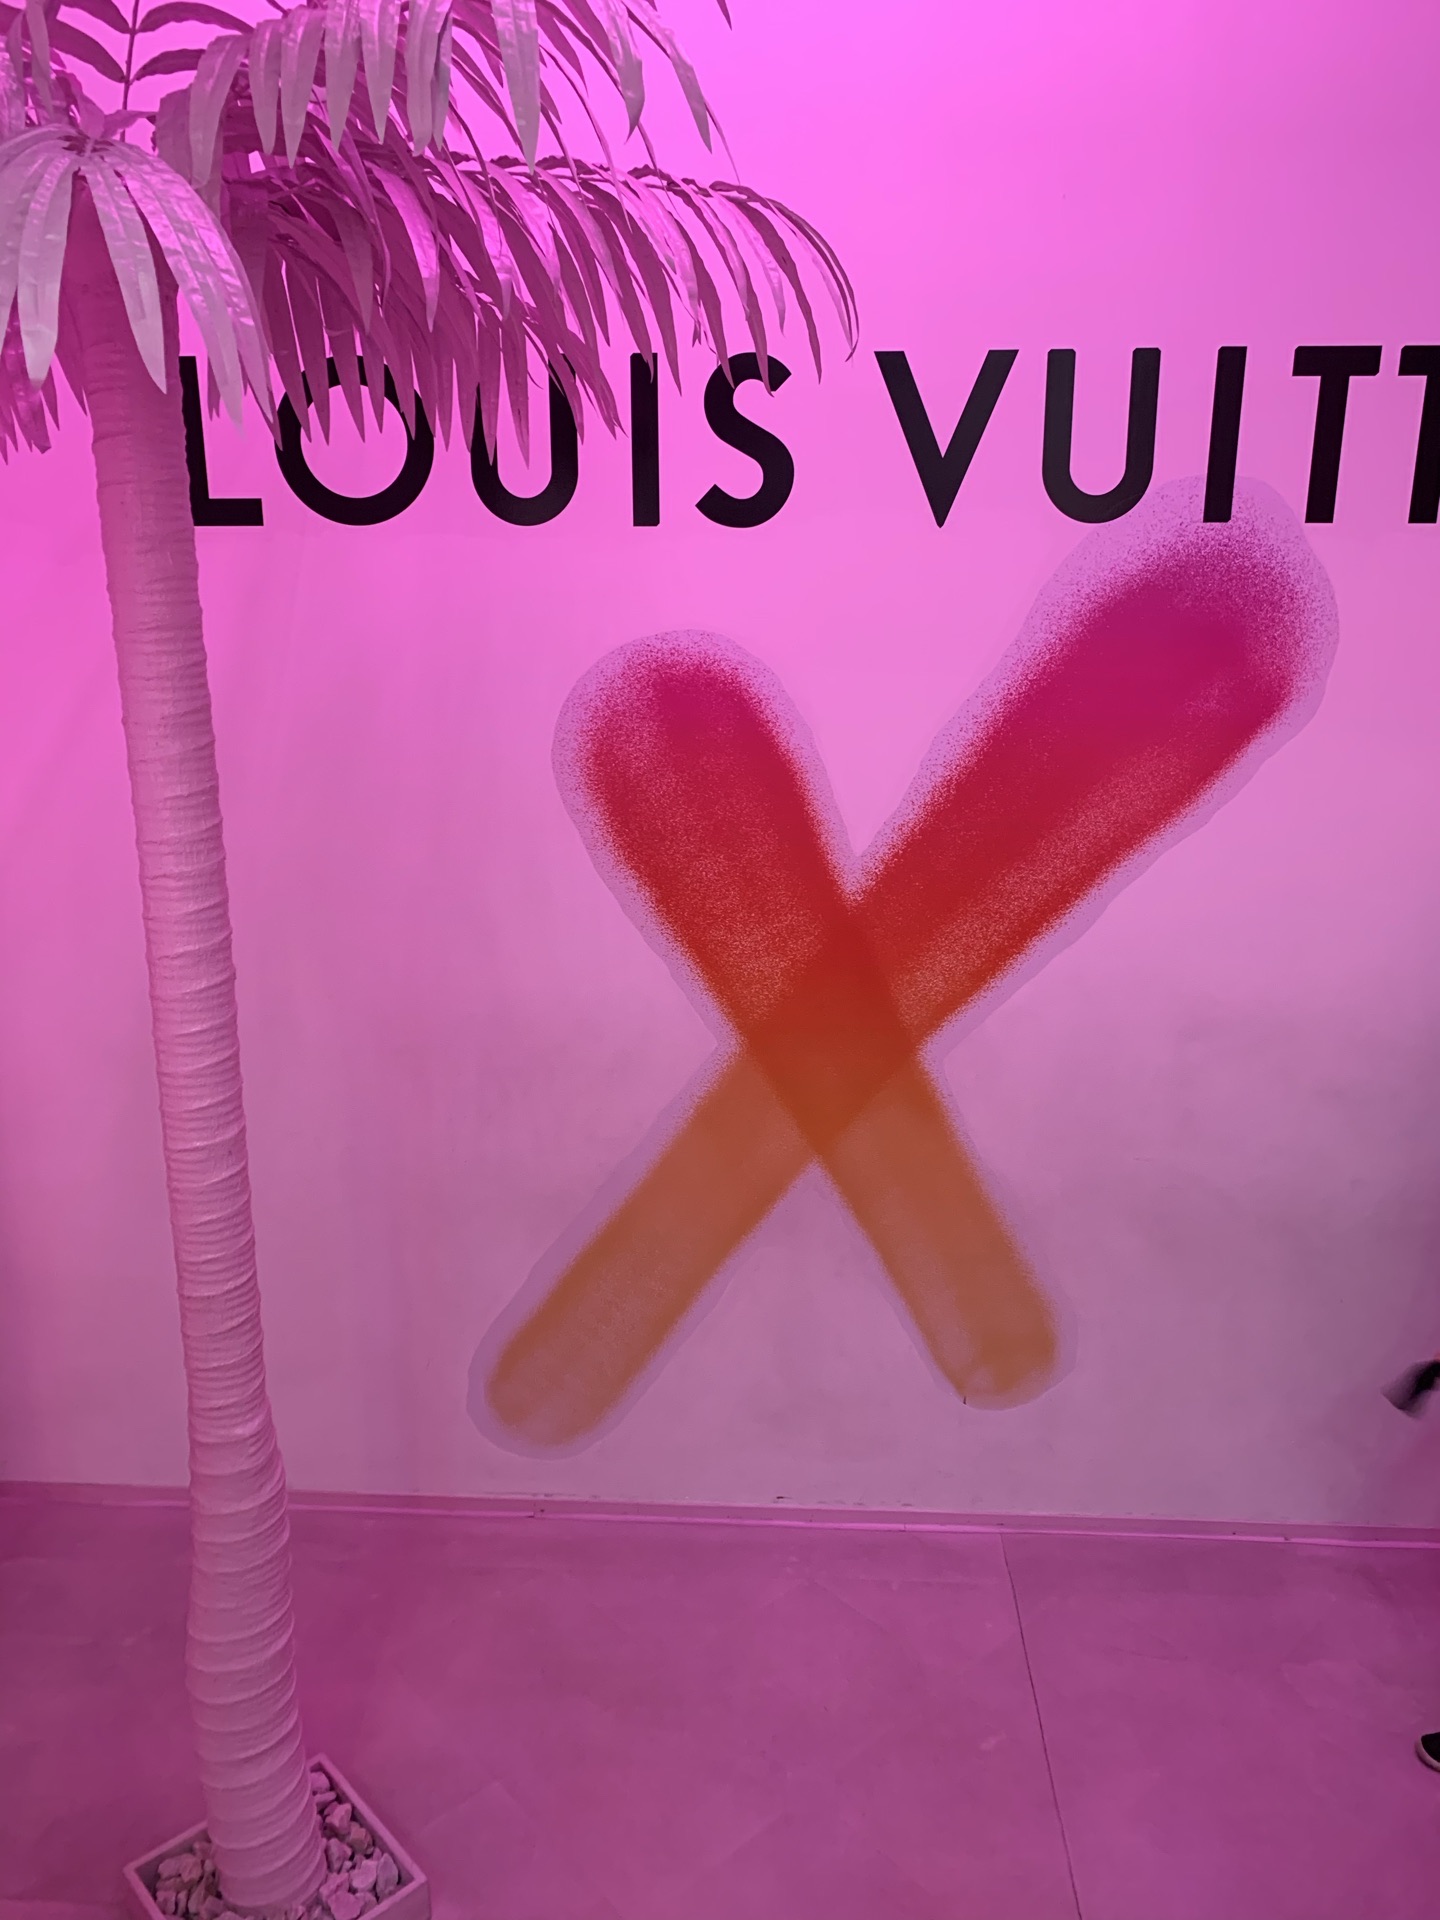 Louis Vuitton Beverly Center Los Angeles